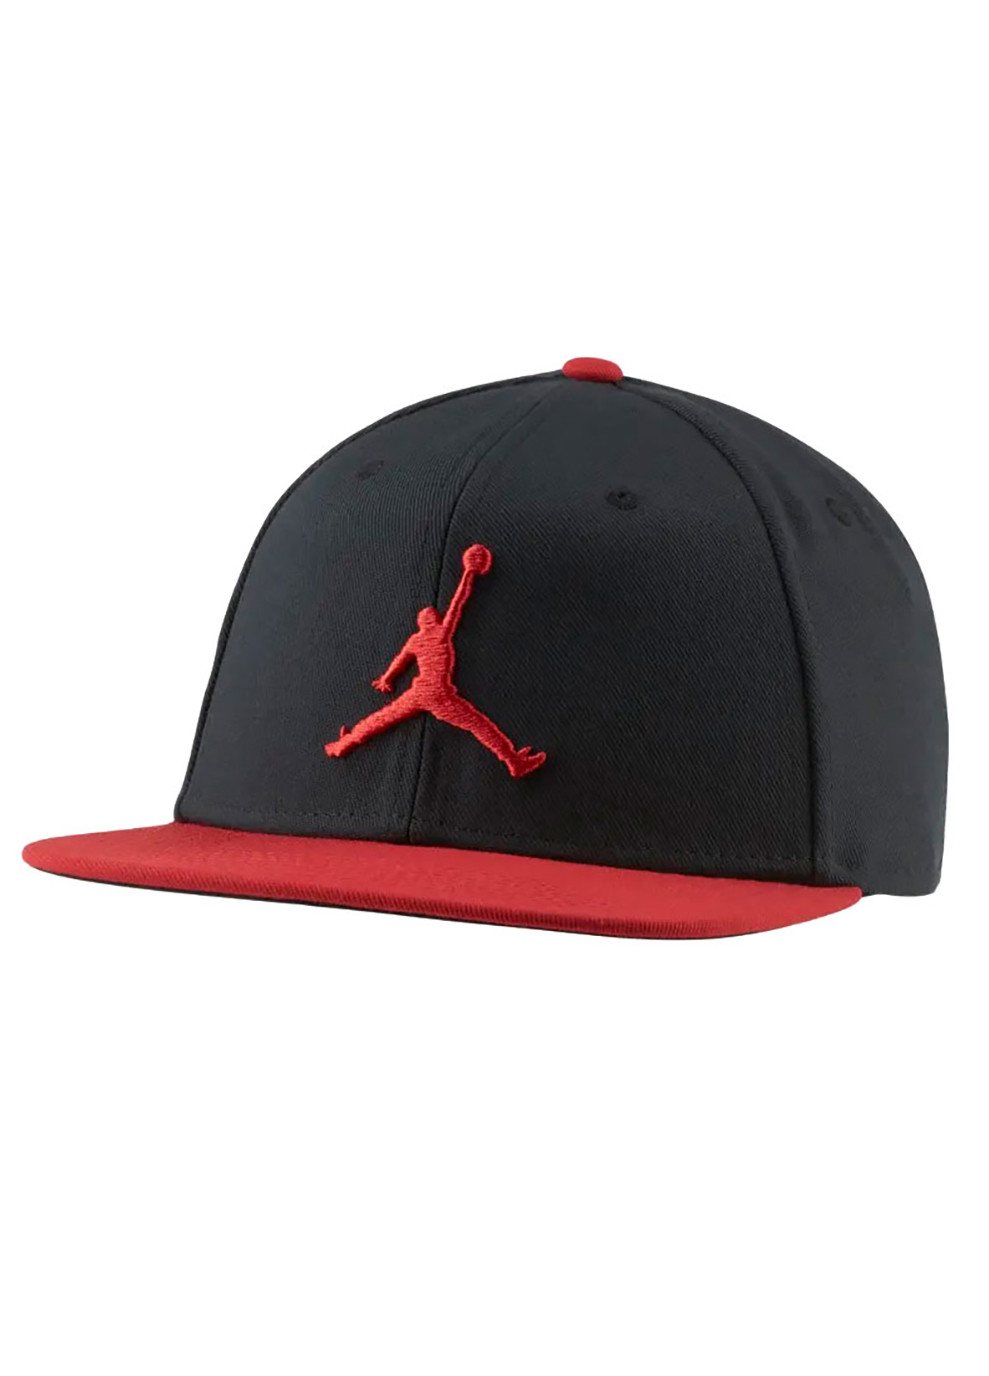 Кепка Jordan Pro Jumpman Snapback black/red — AR2118-019 Nike (254315301)